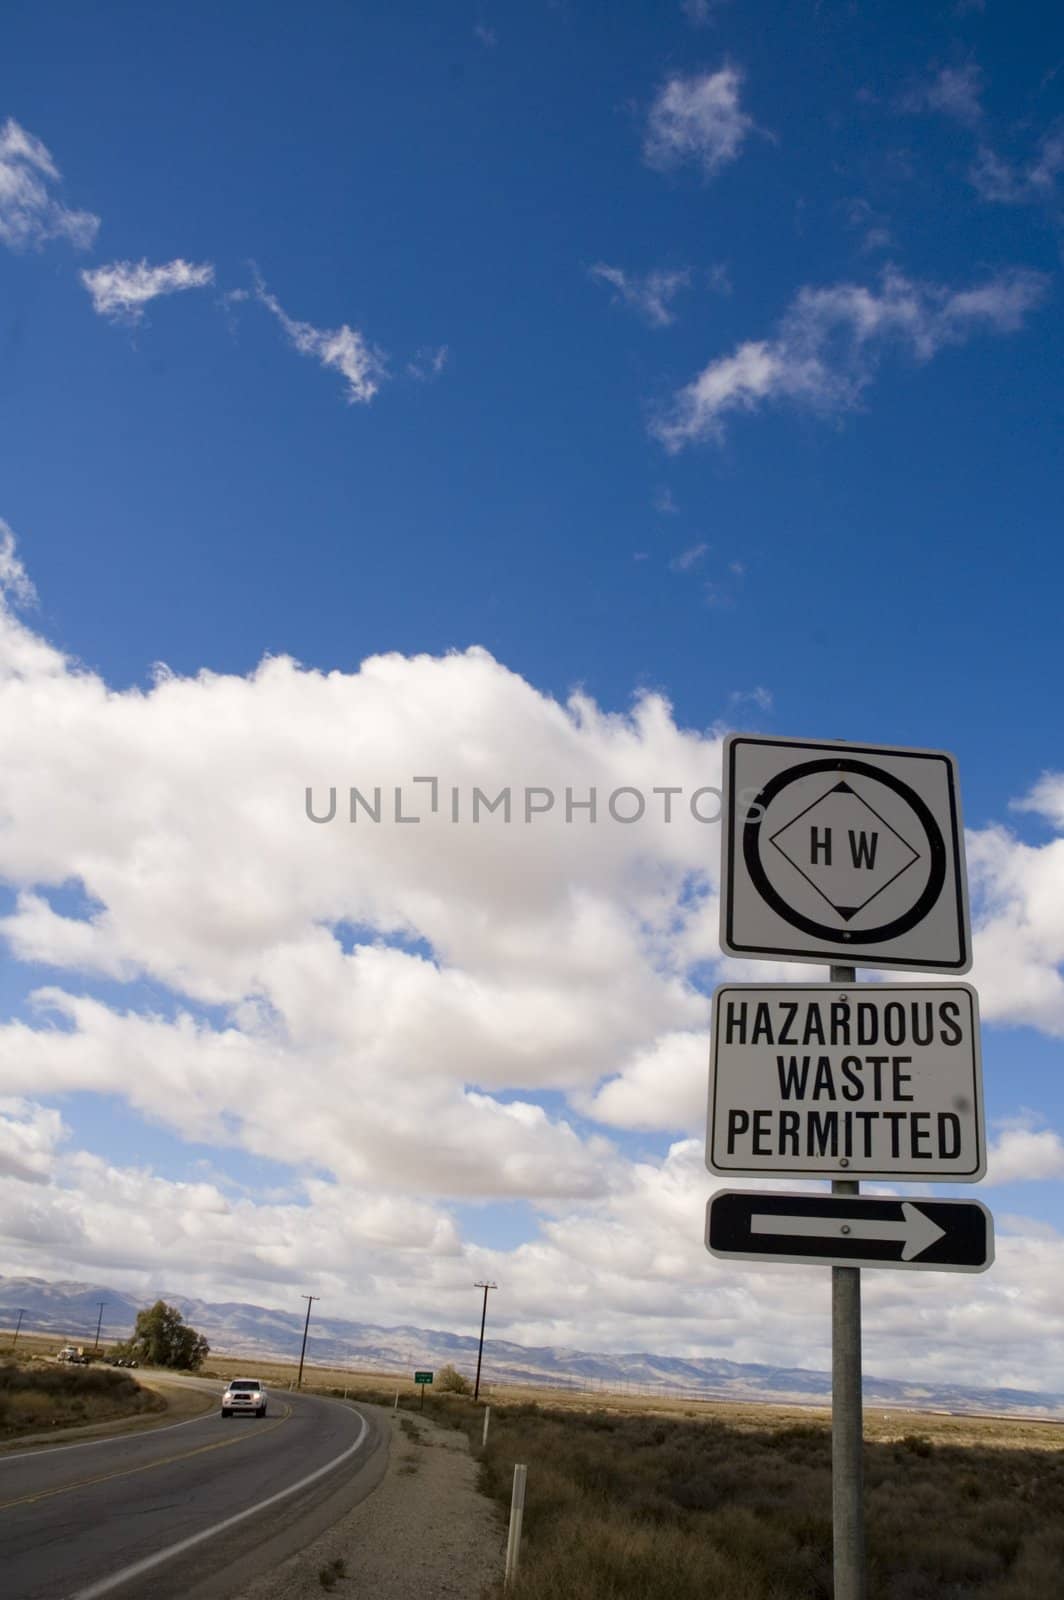 Hazardous waste sign by jeffbanke